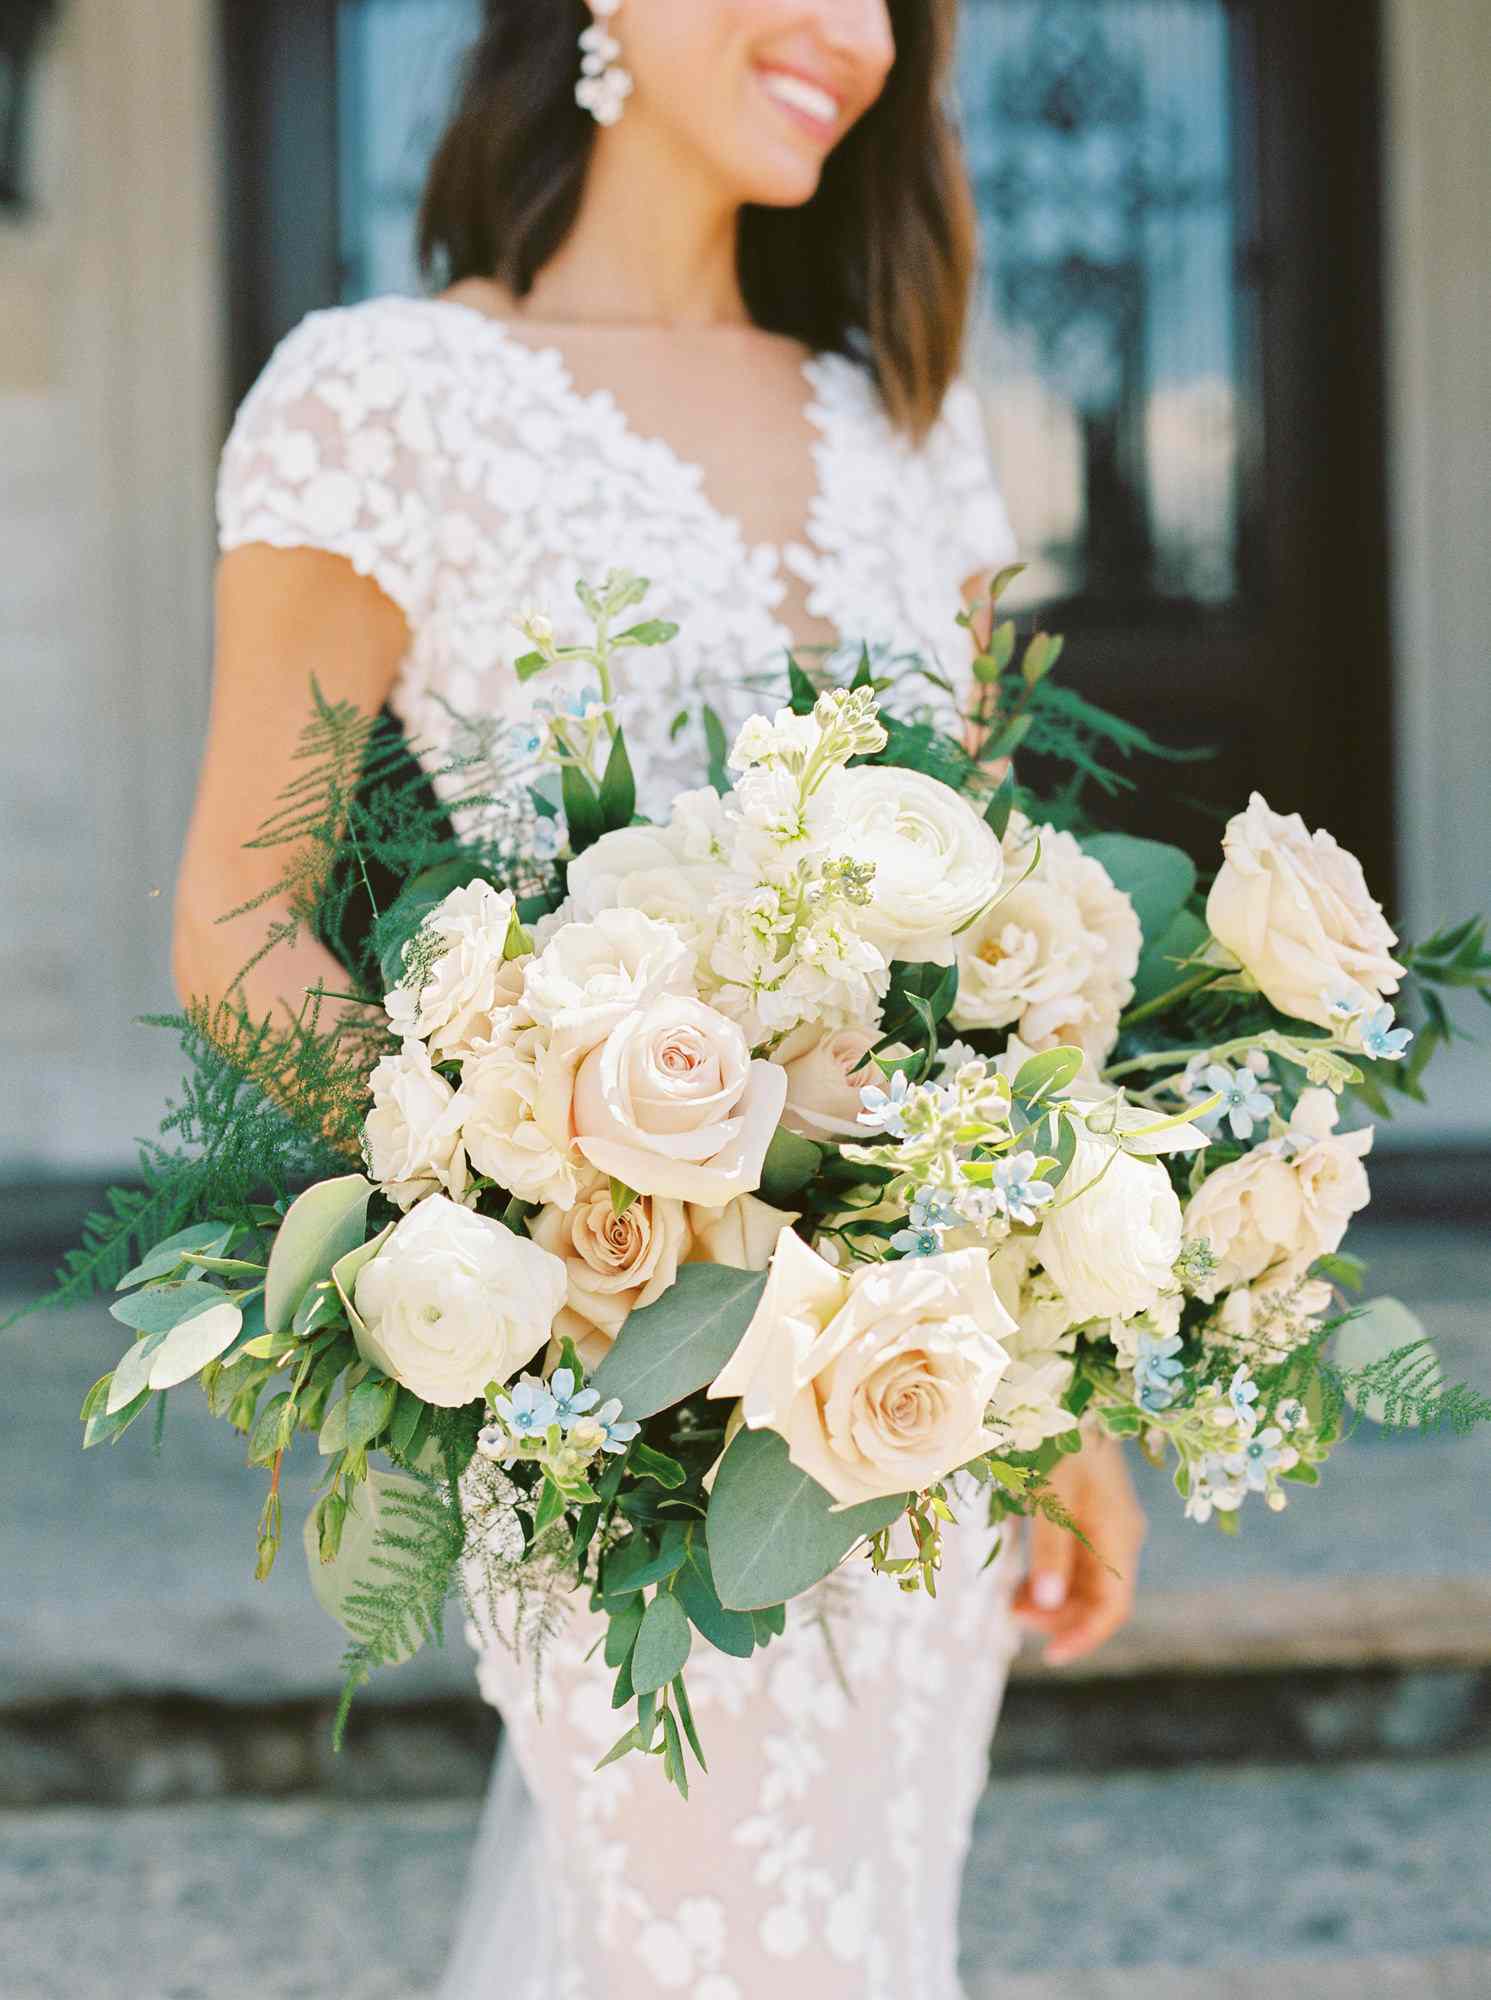 roses, ranunculus, blue tweedia, and greenery bridal wedding bouquet